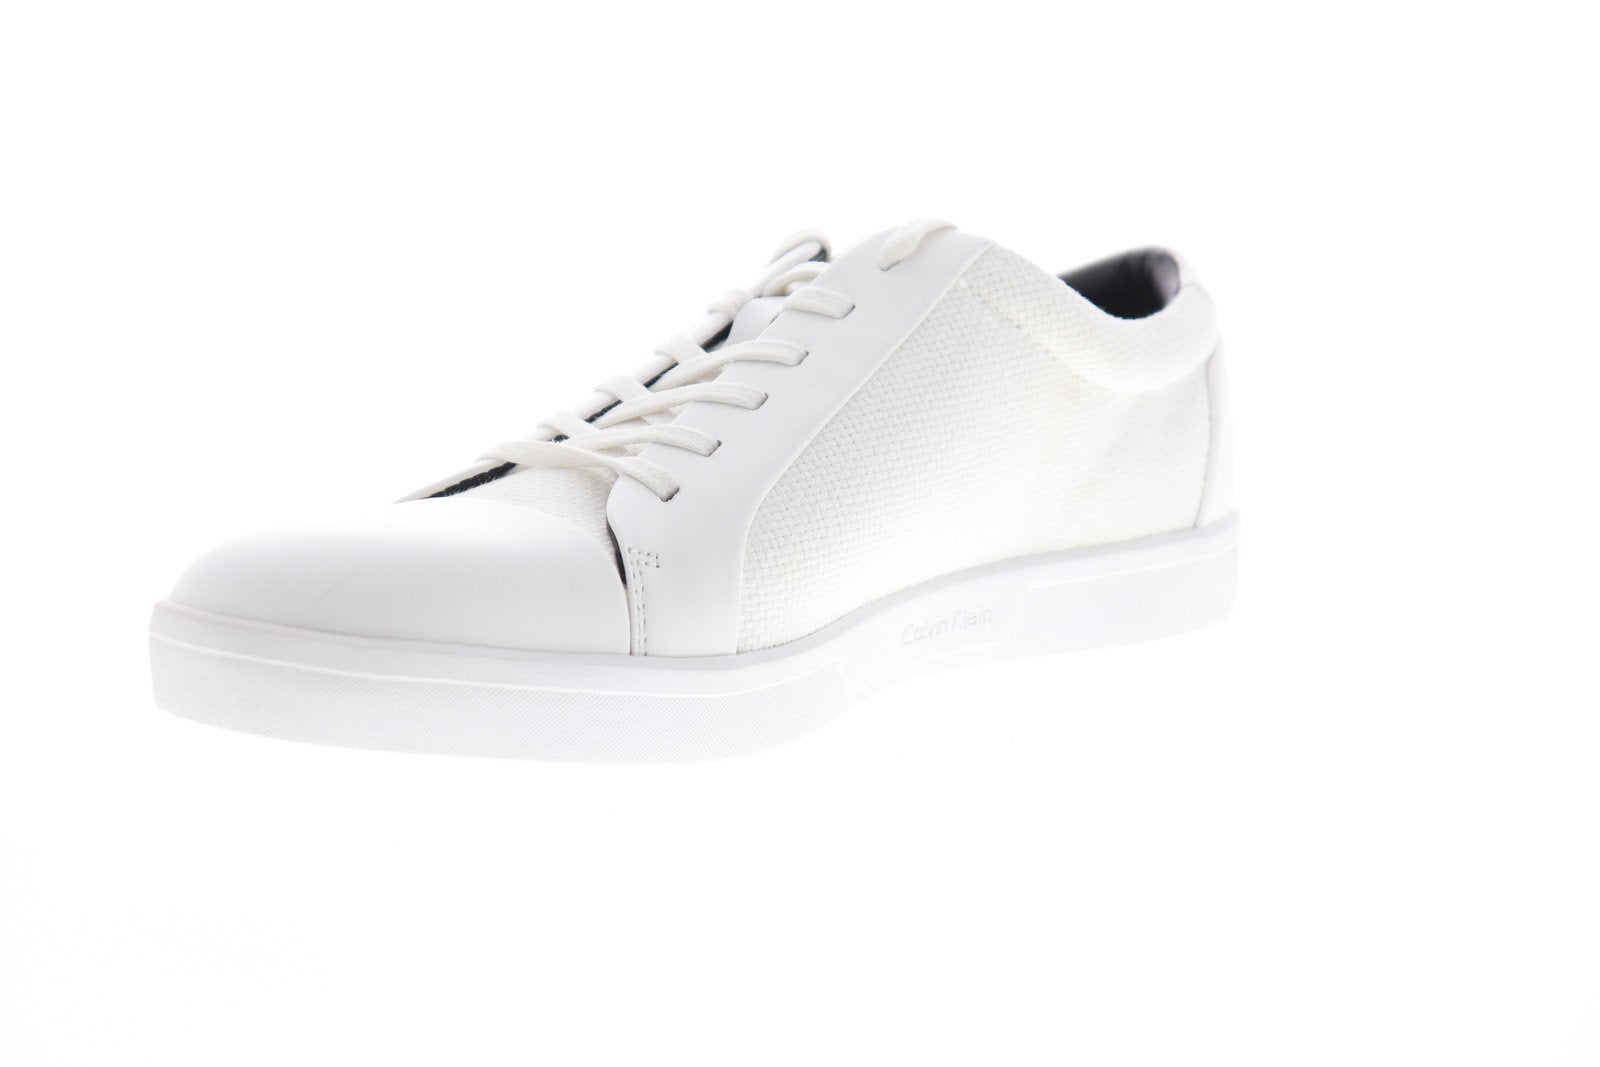 geroosterd brood Accommodatie Intuïtie Calvin Klein Igor Nappa Calf 34F1509-WHT Mens White Designer Sneakers -  Ruze Shoes